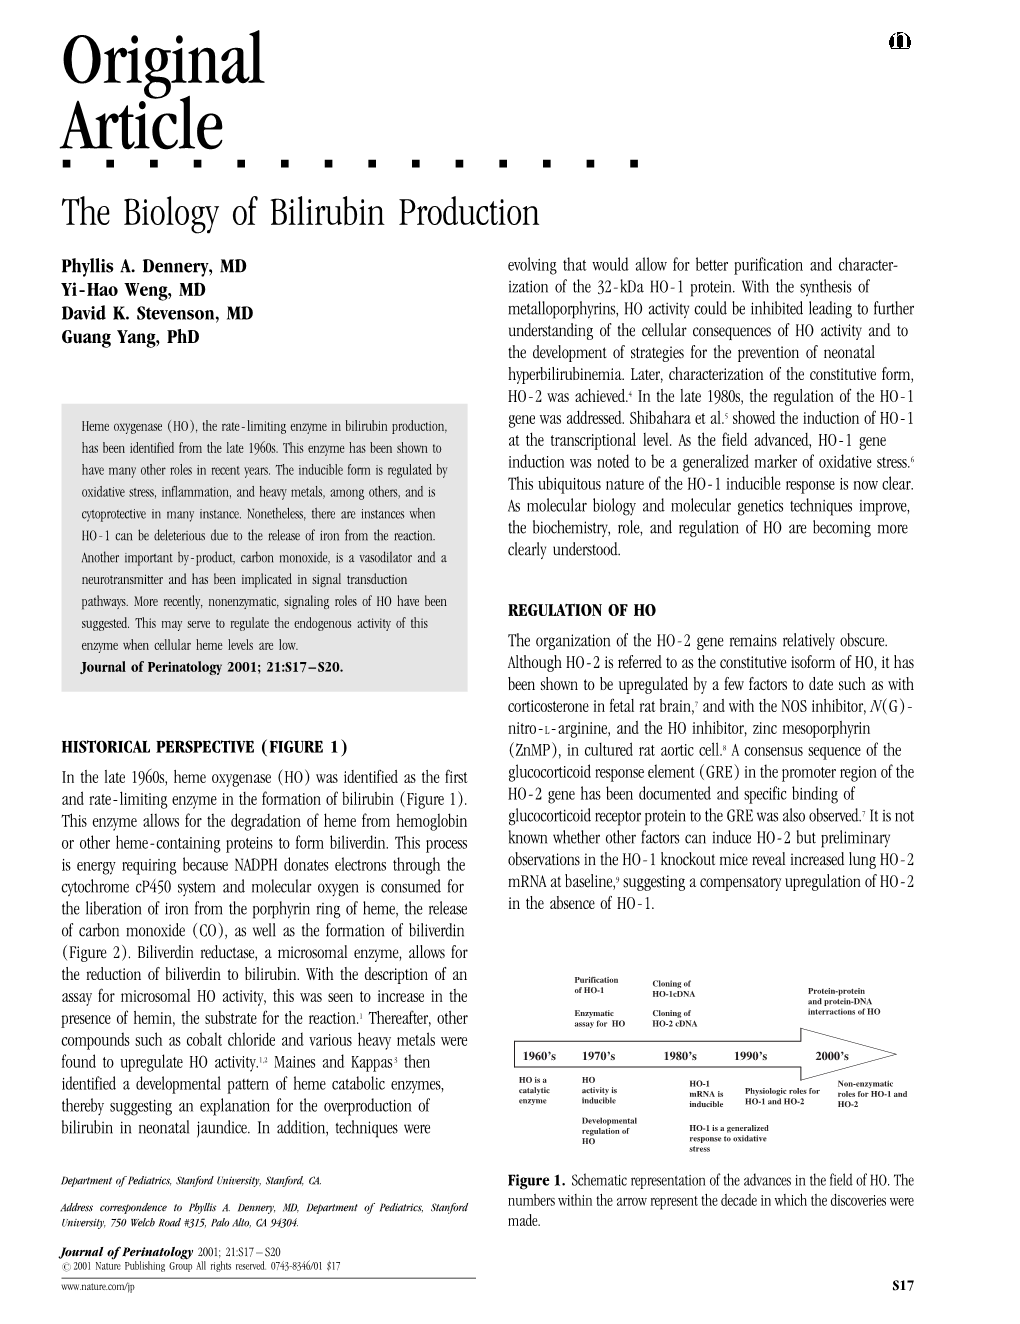 The Biology of Bilirubin Production